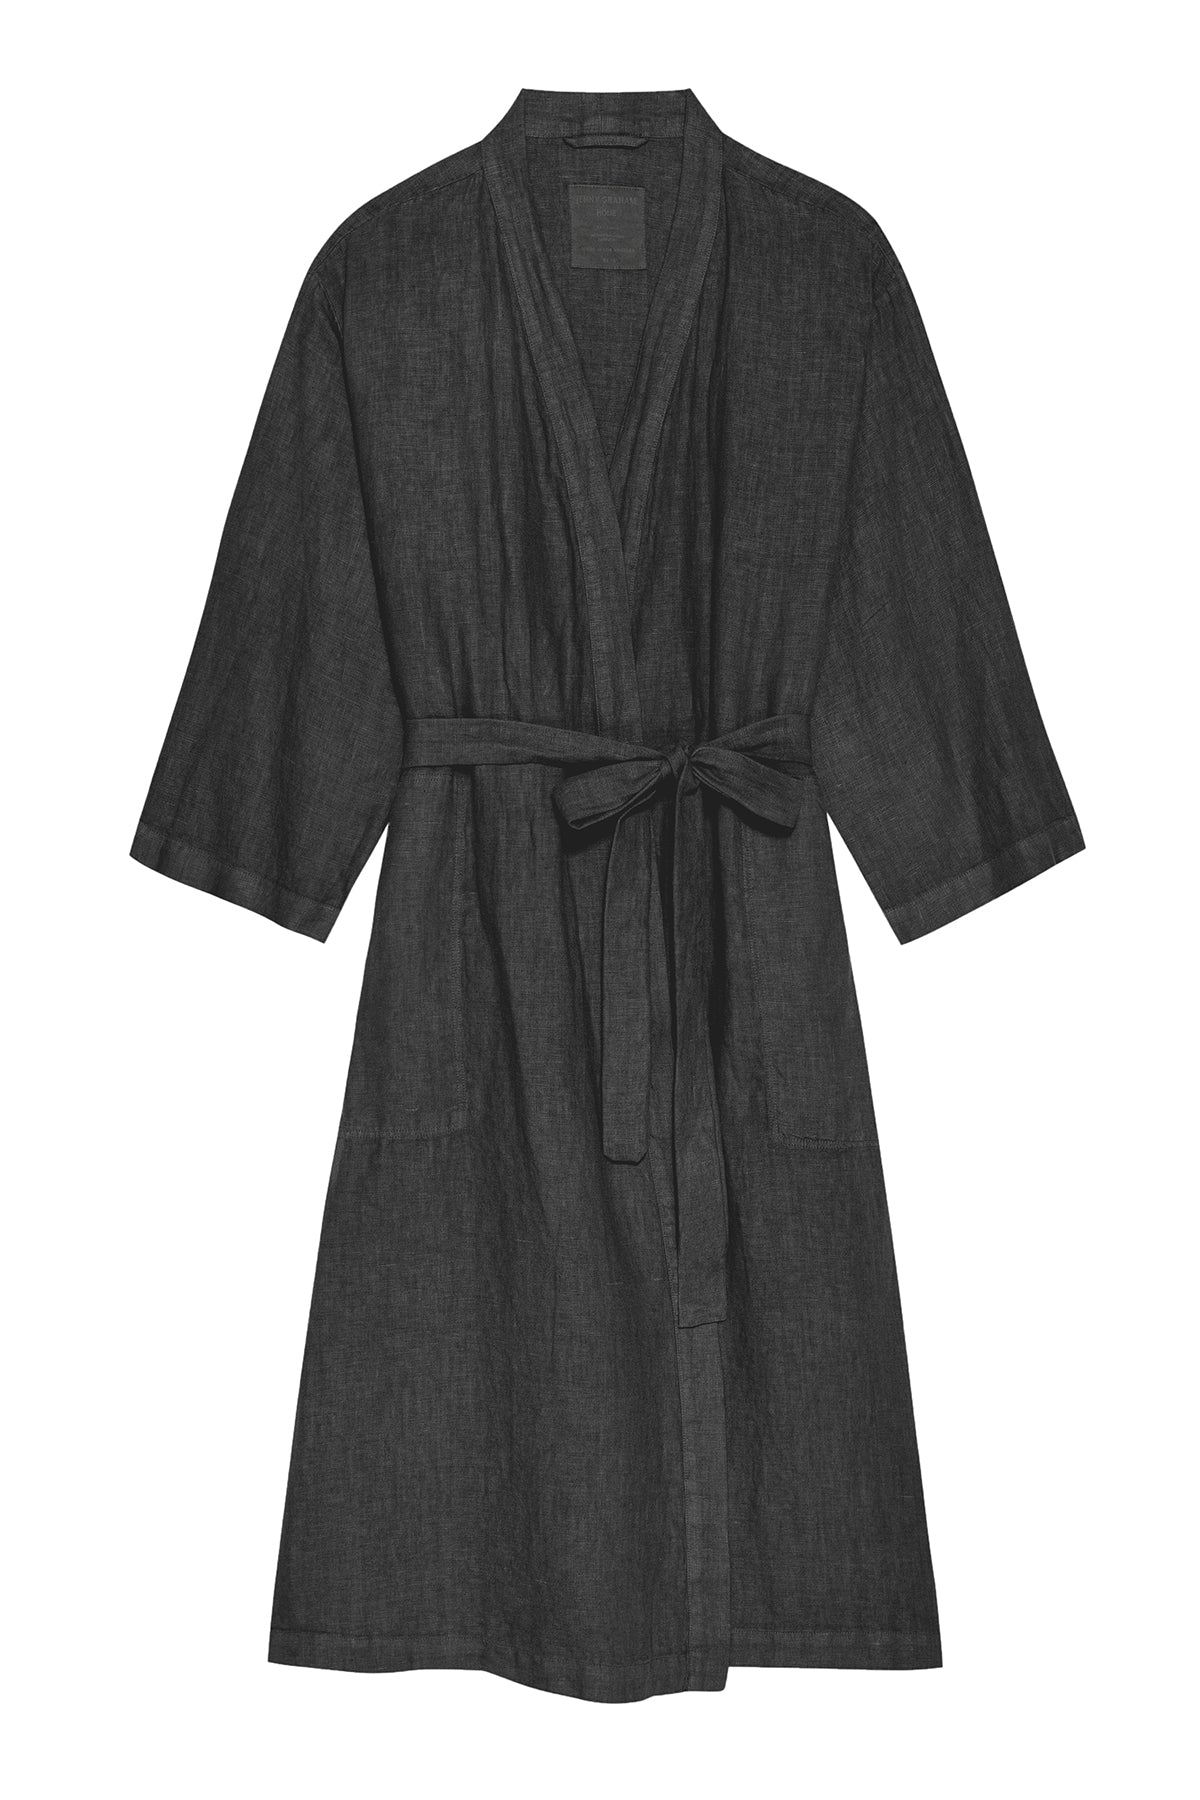   Jenny Graham Linen Robe in black flat shot 